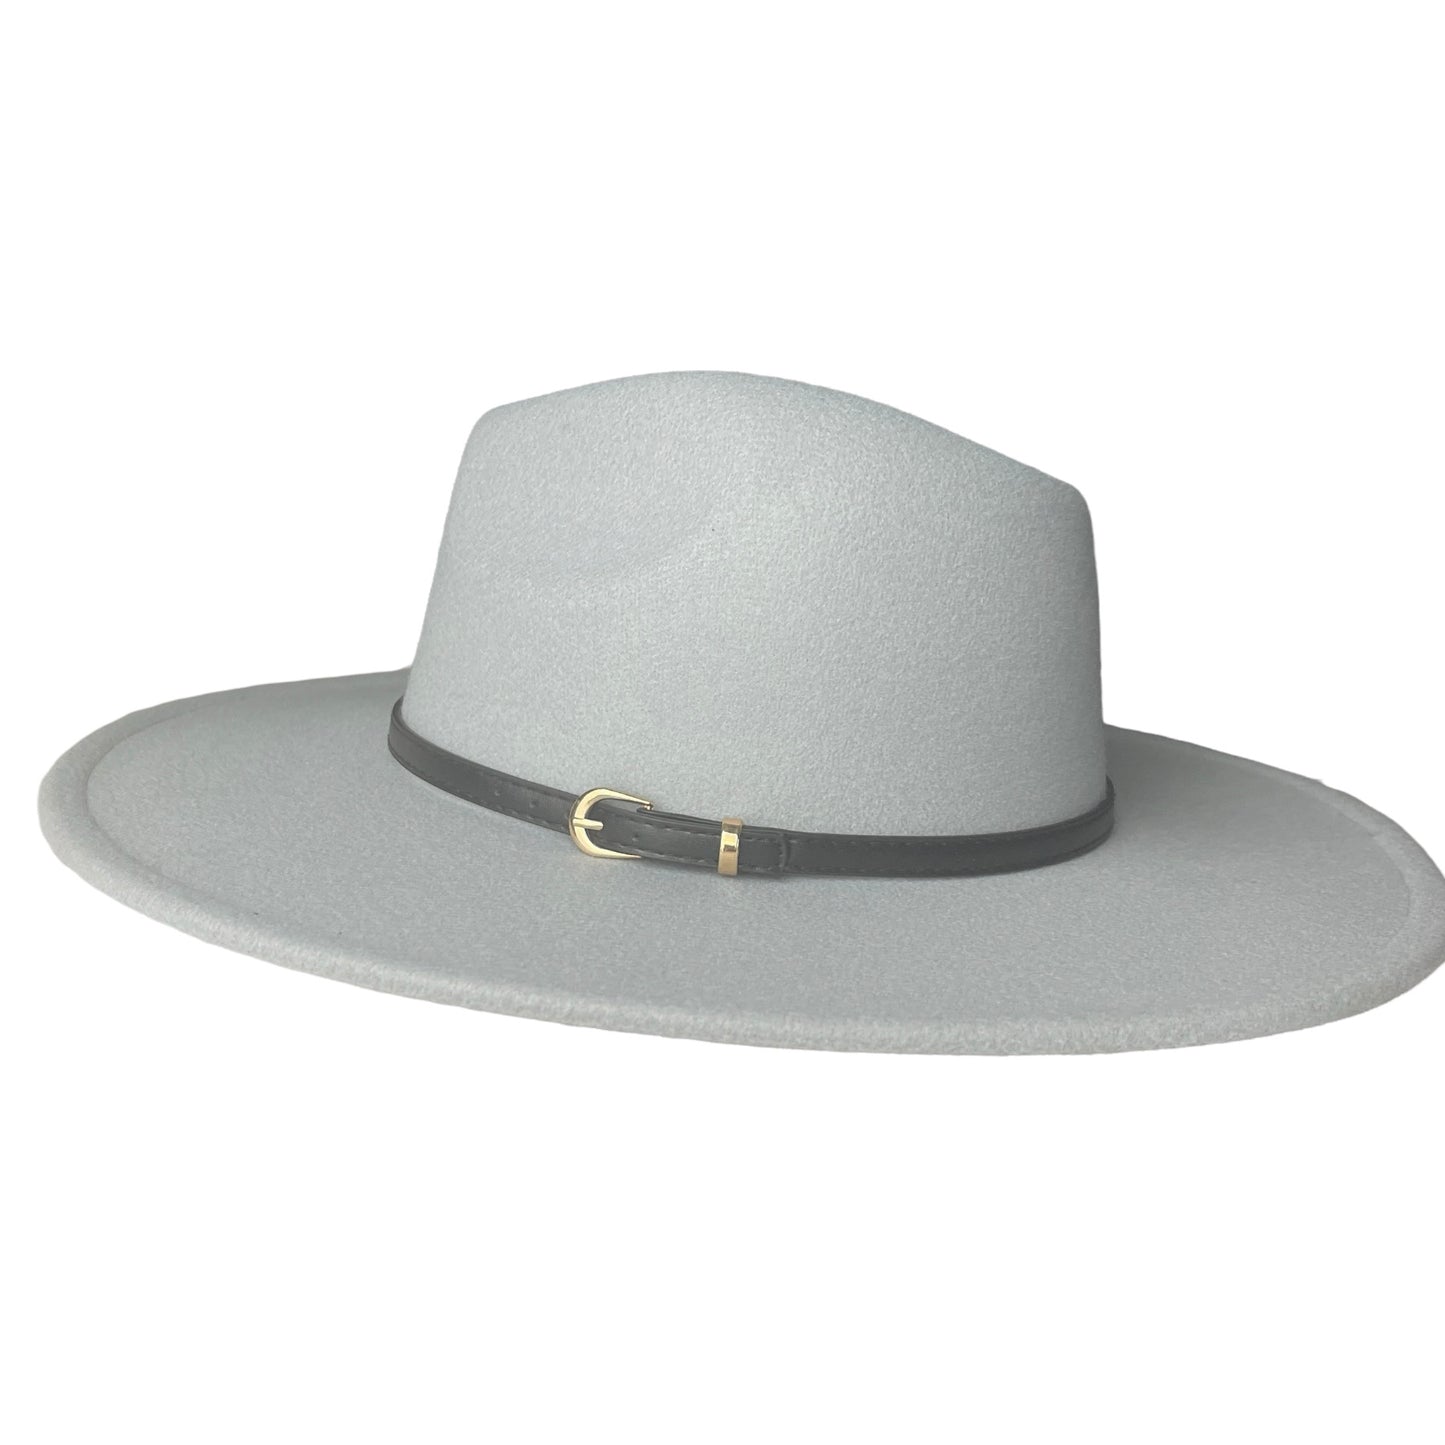 GKR "Chapeau" Hats